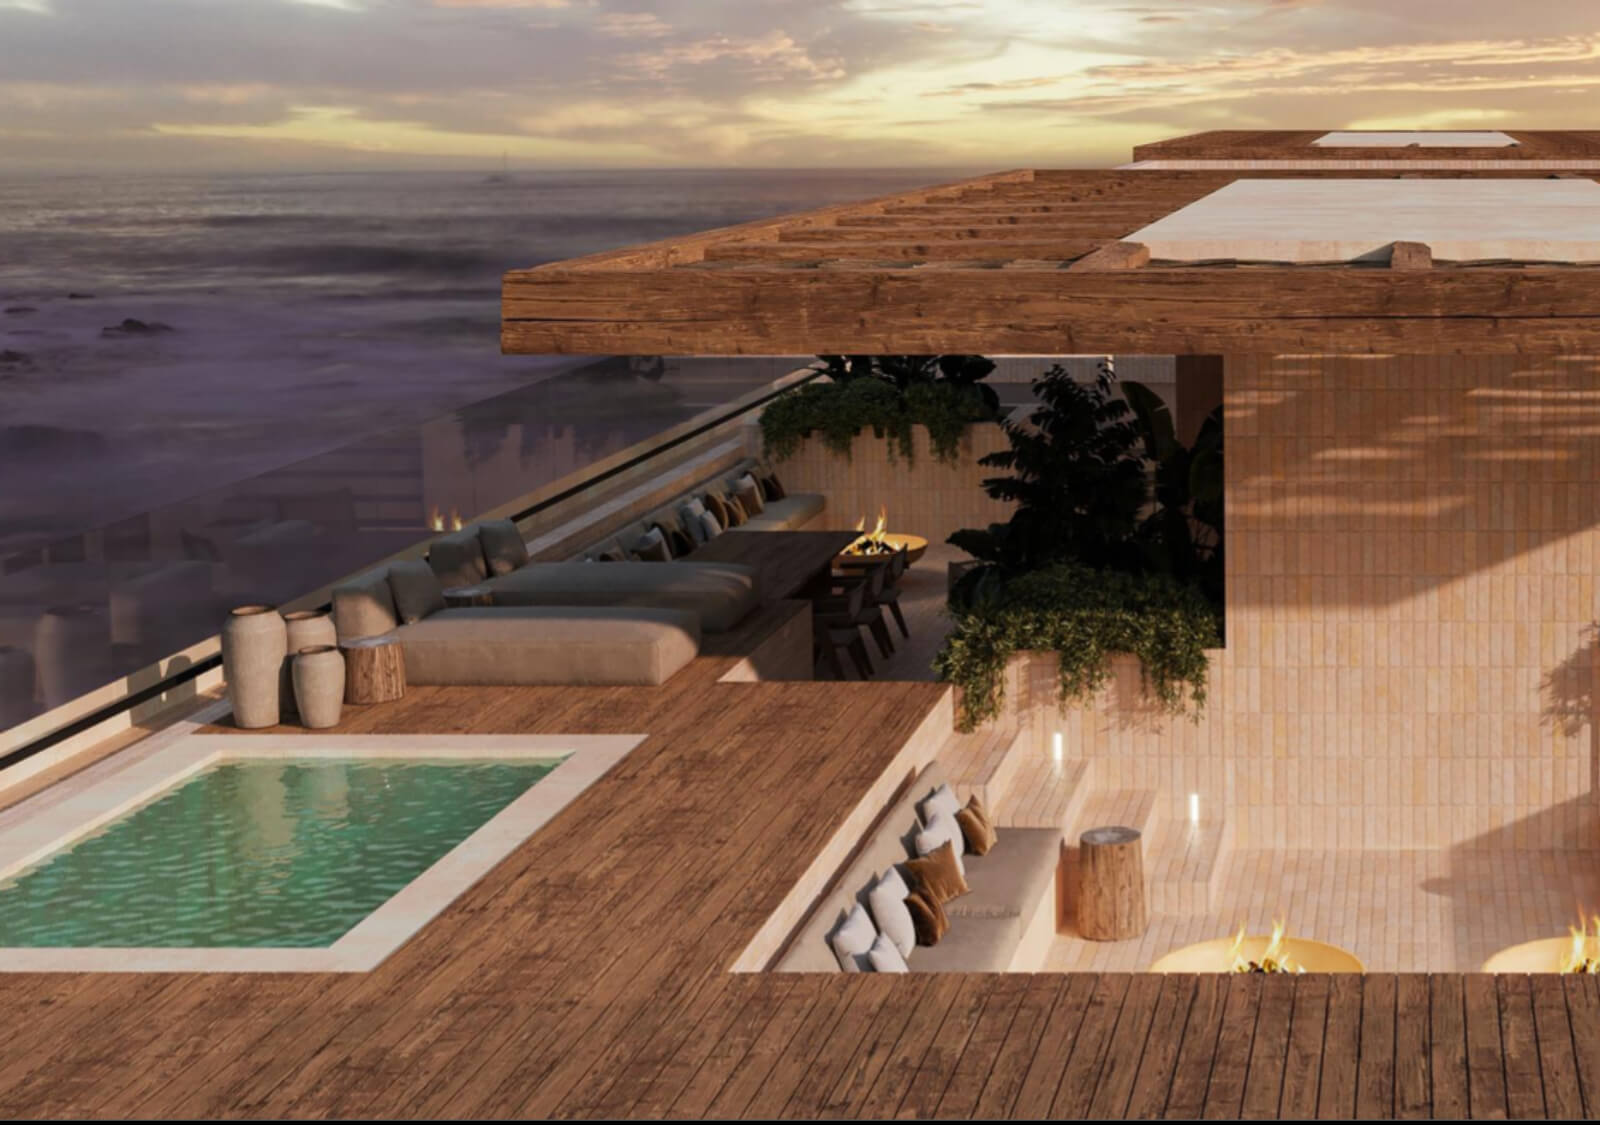 Penthouse vista al mar, terraza privada de 196 m2, alberca frente al mar, diseño único, arquitectura innovadora, room service, kids club